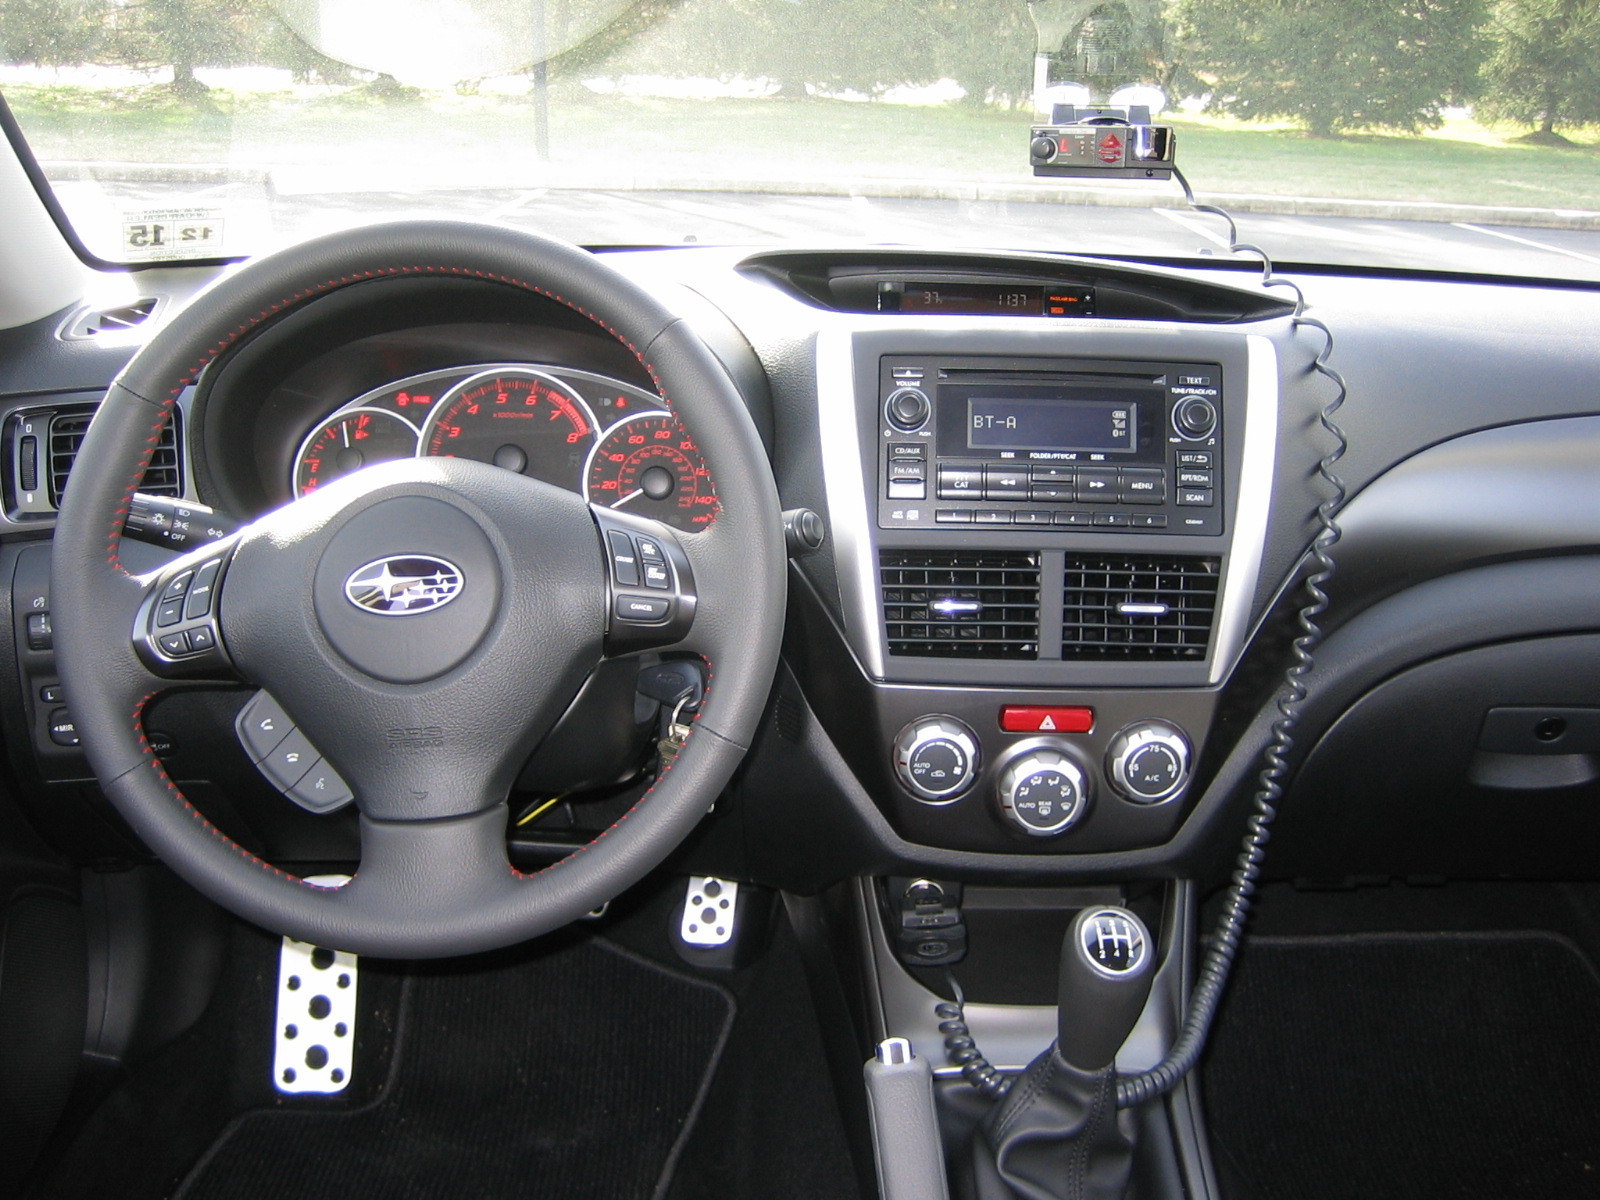 2011 Subaru WRX in Satin White Pearl (SWP)